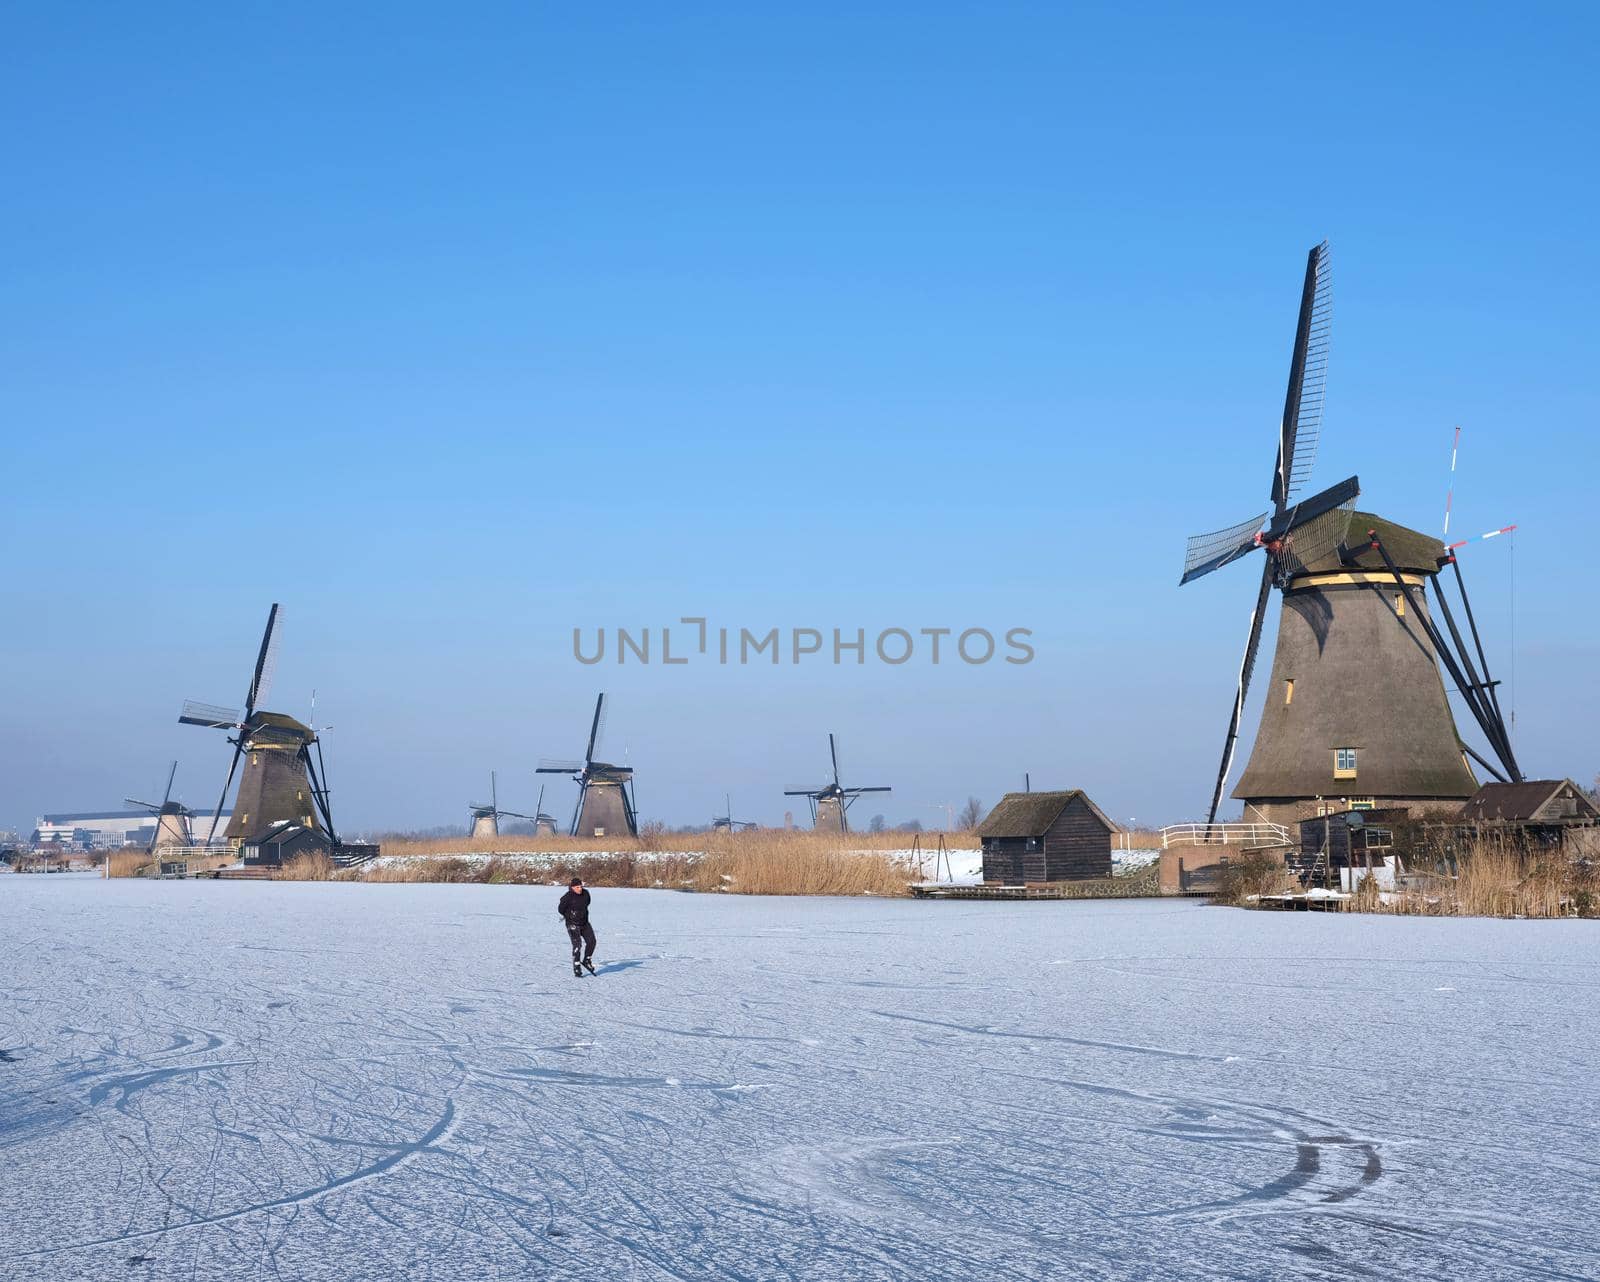 kinderdijk, netherlands, 12 february 2021: man skates on the ice near kinderdijk windmills in holland on sunny winter day